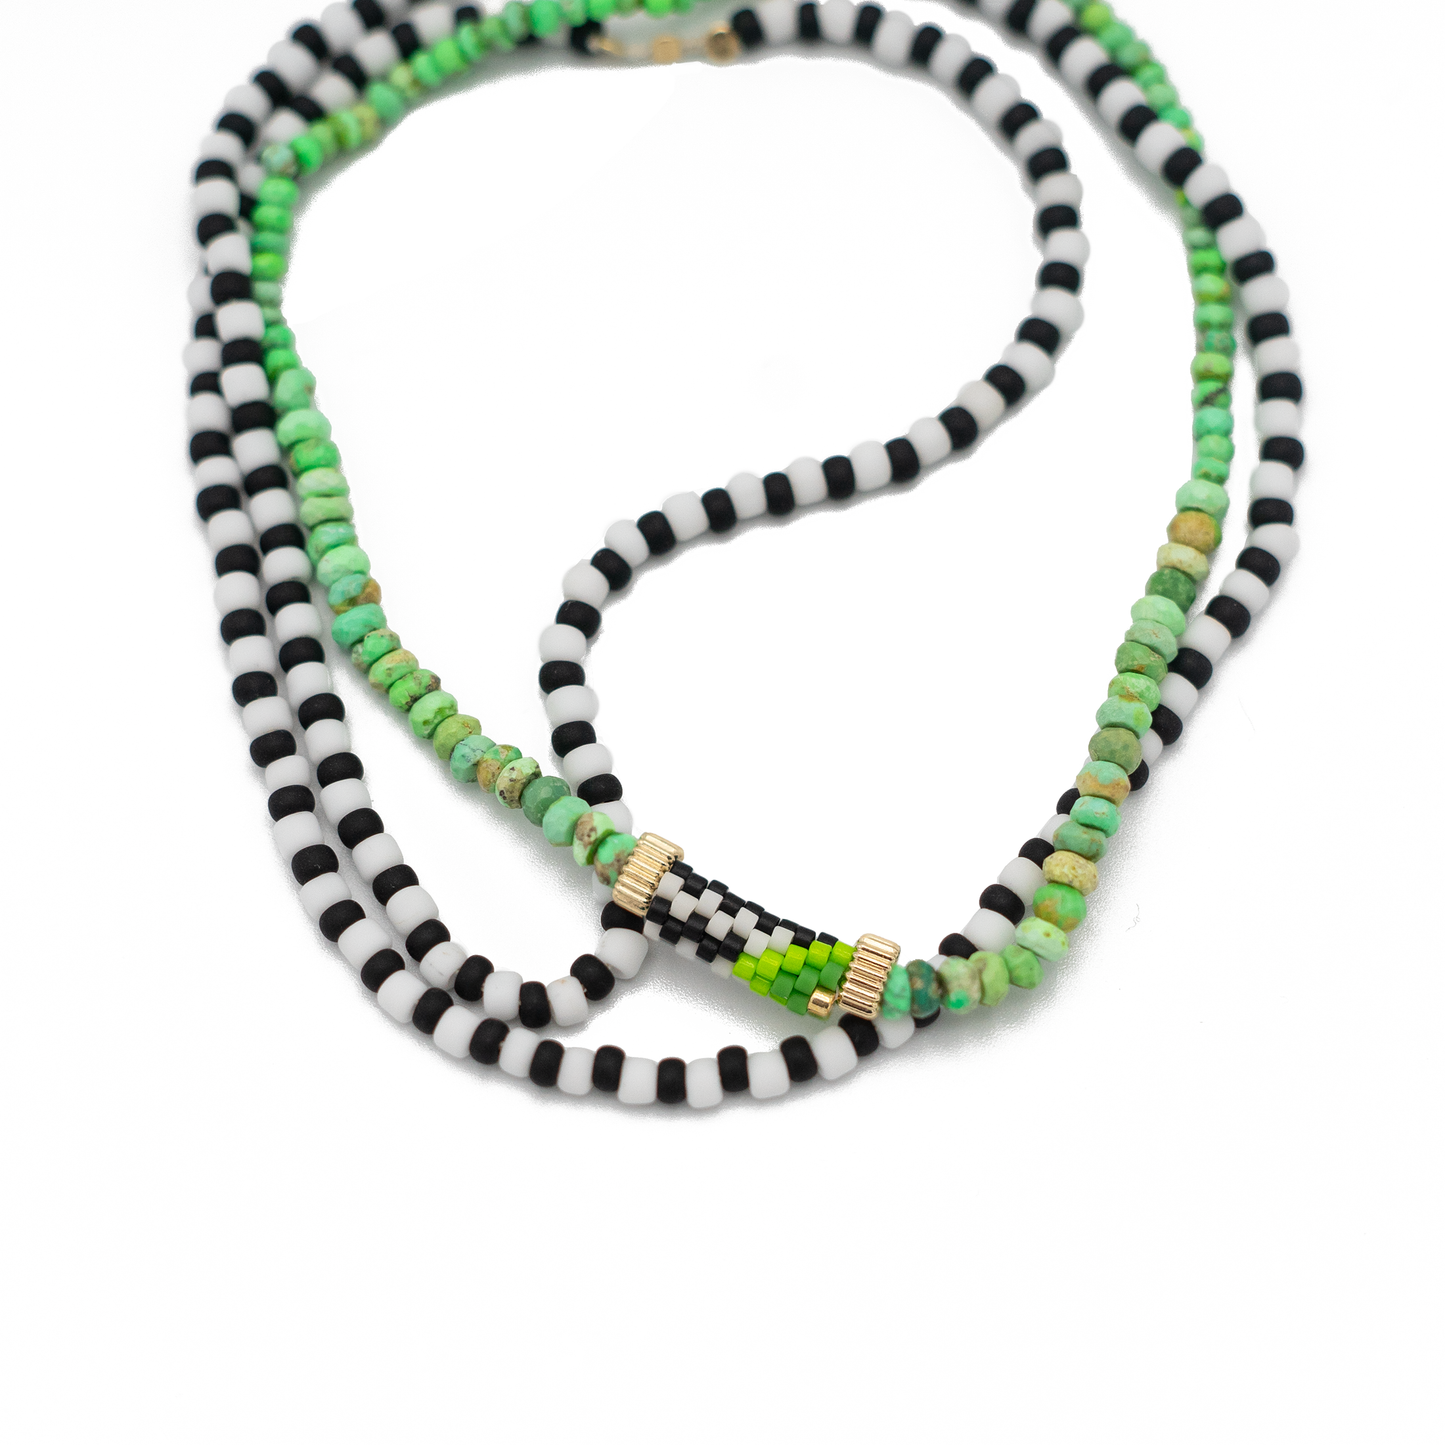 Long Garden Necklace in Green, Black & White